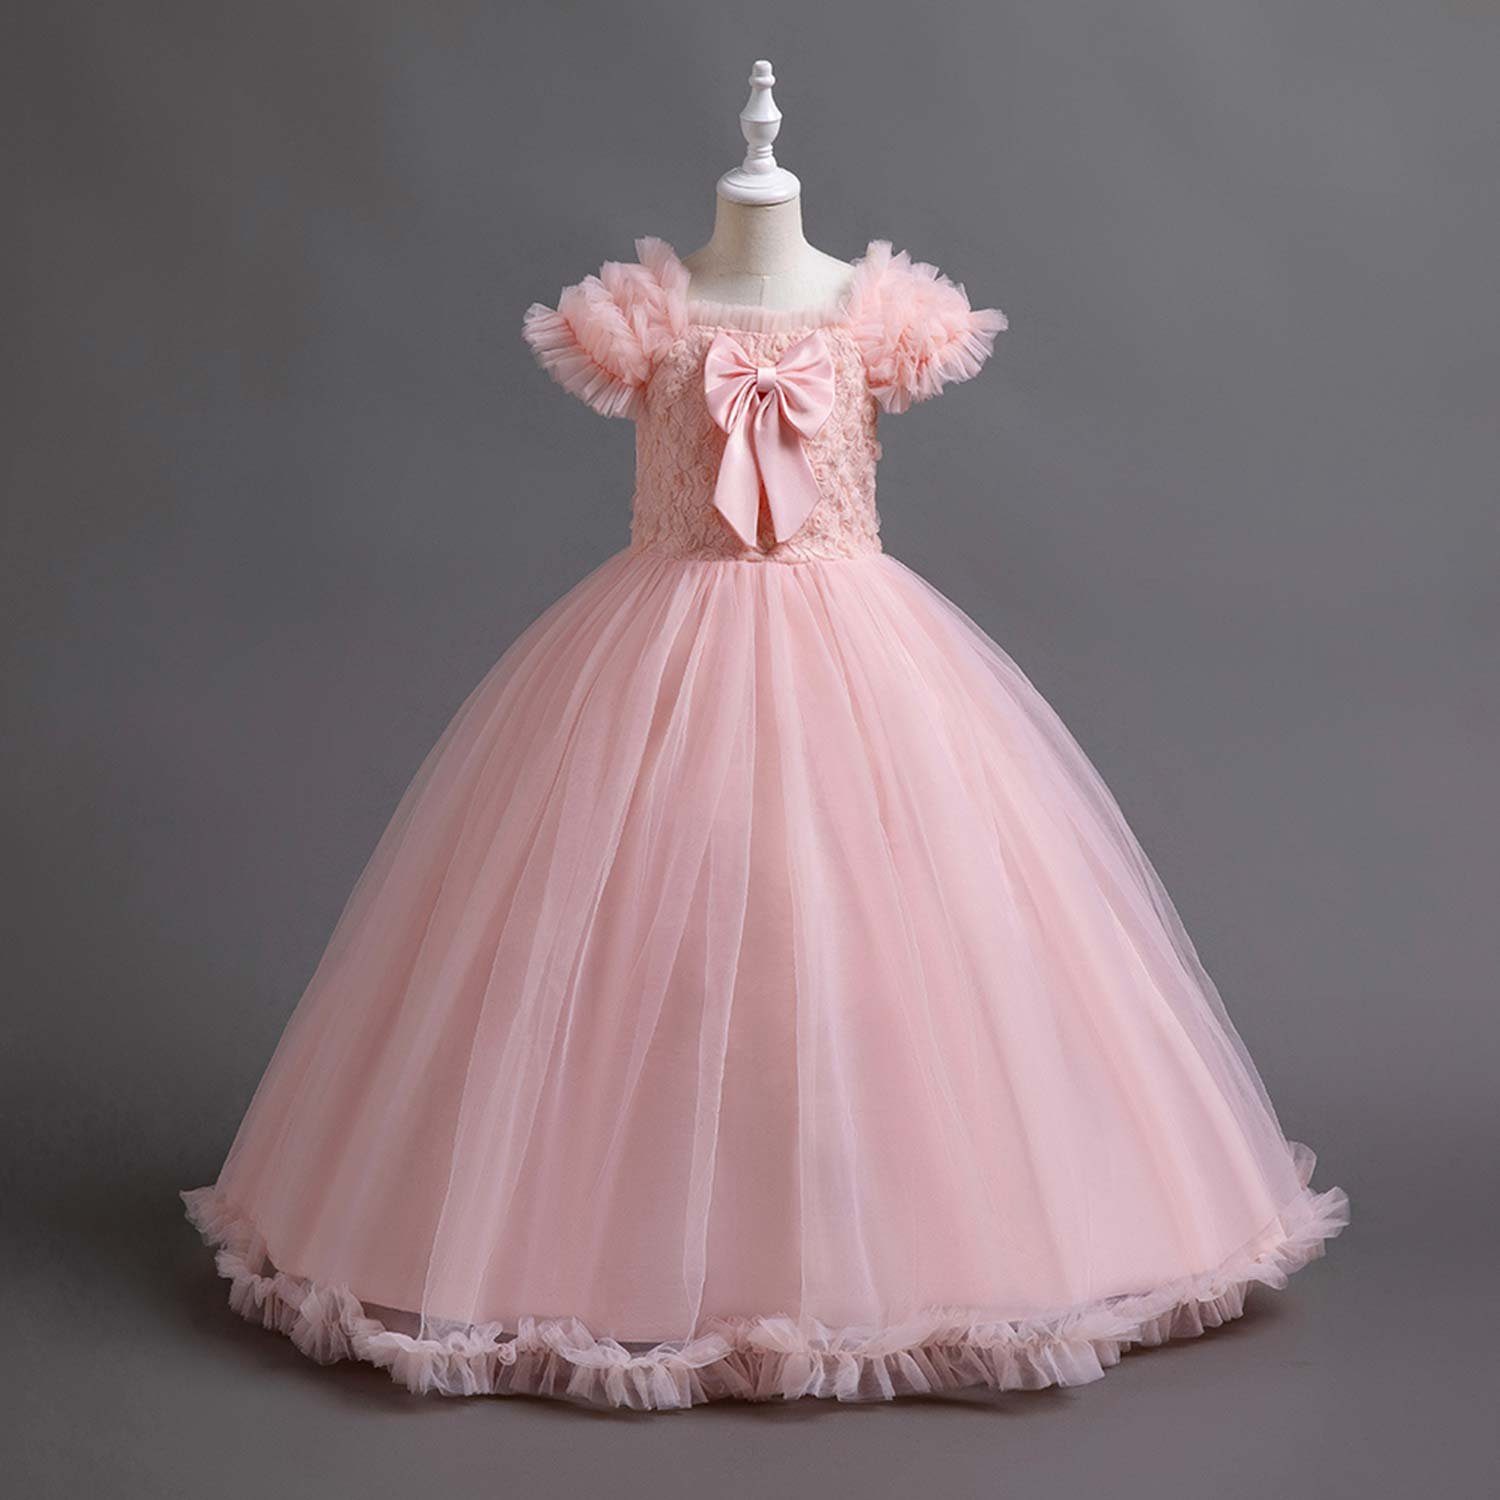 Tüllkleid Ballkleid Rosa Prinzessinnenkleider Abendkleider Daisred Kinderkleider